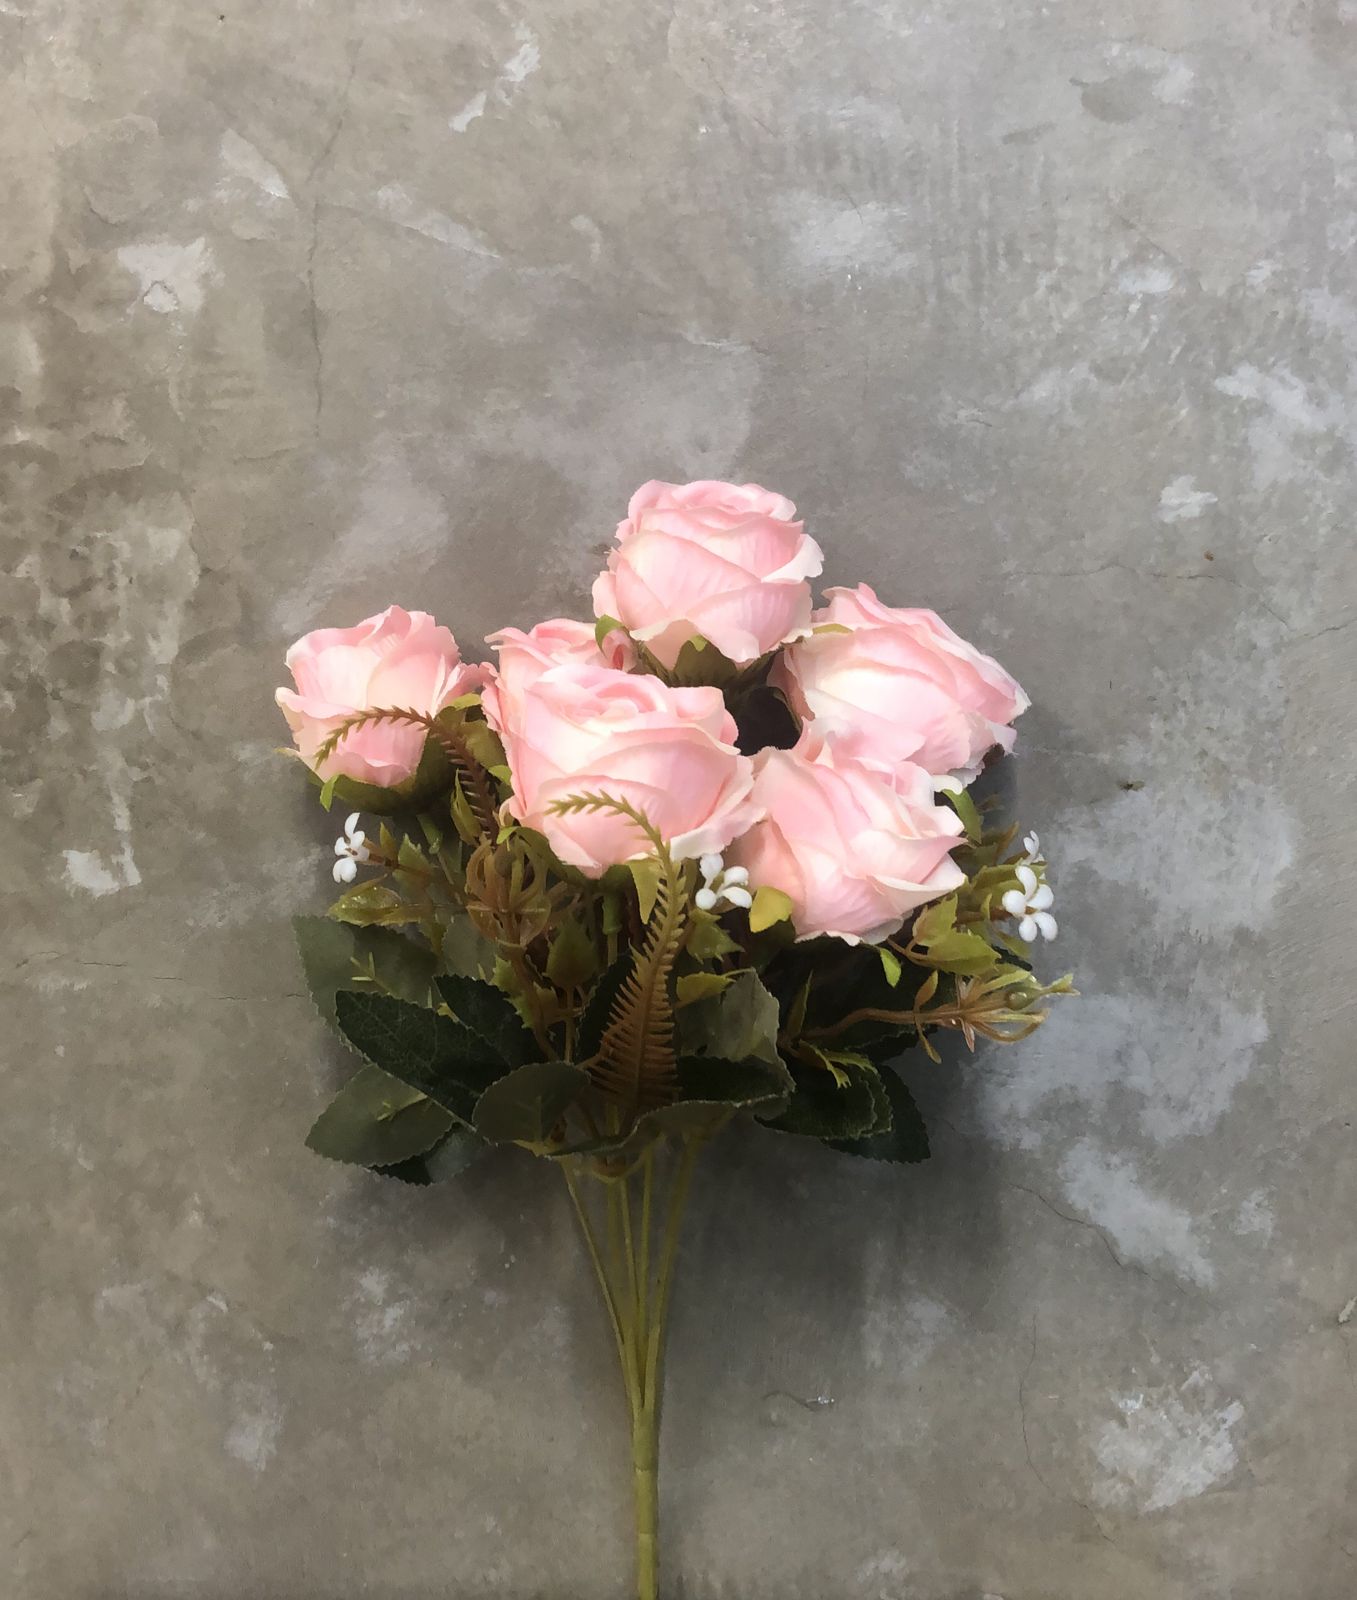 Buquê de Rosas - Rosa Claro de 32cm